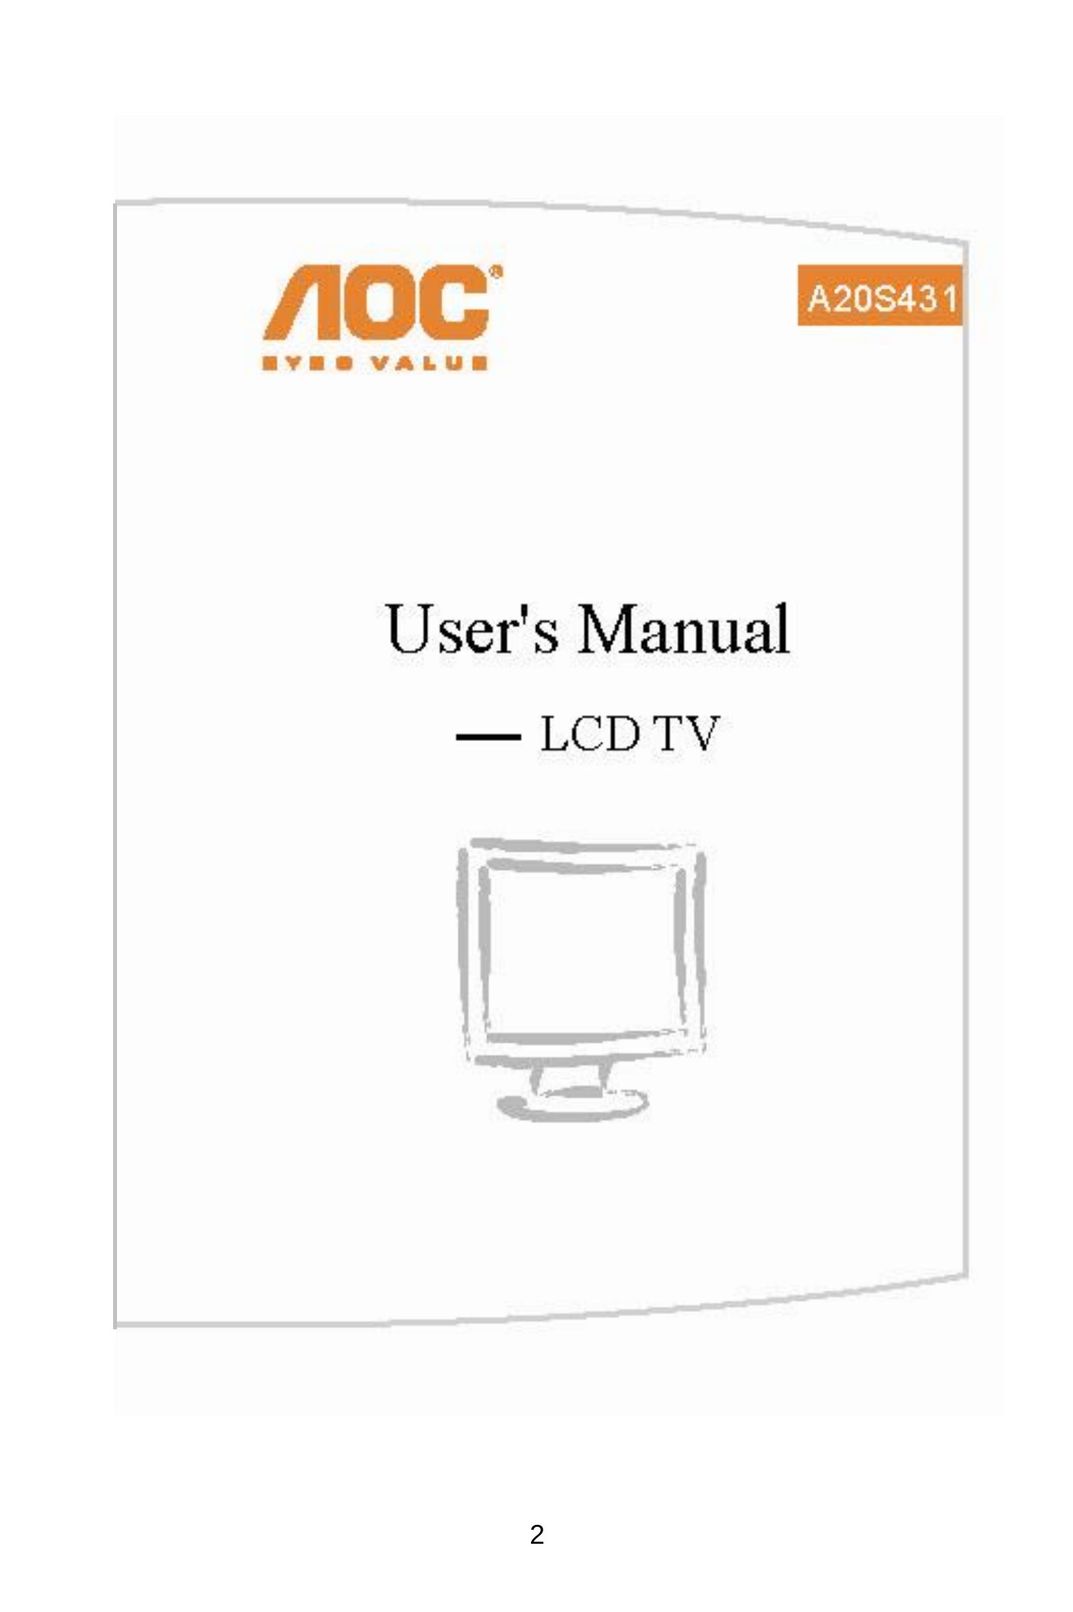 AOC A20S431 Flat Panel Television User Manual